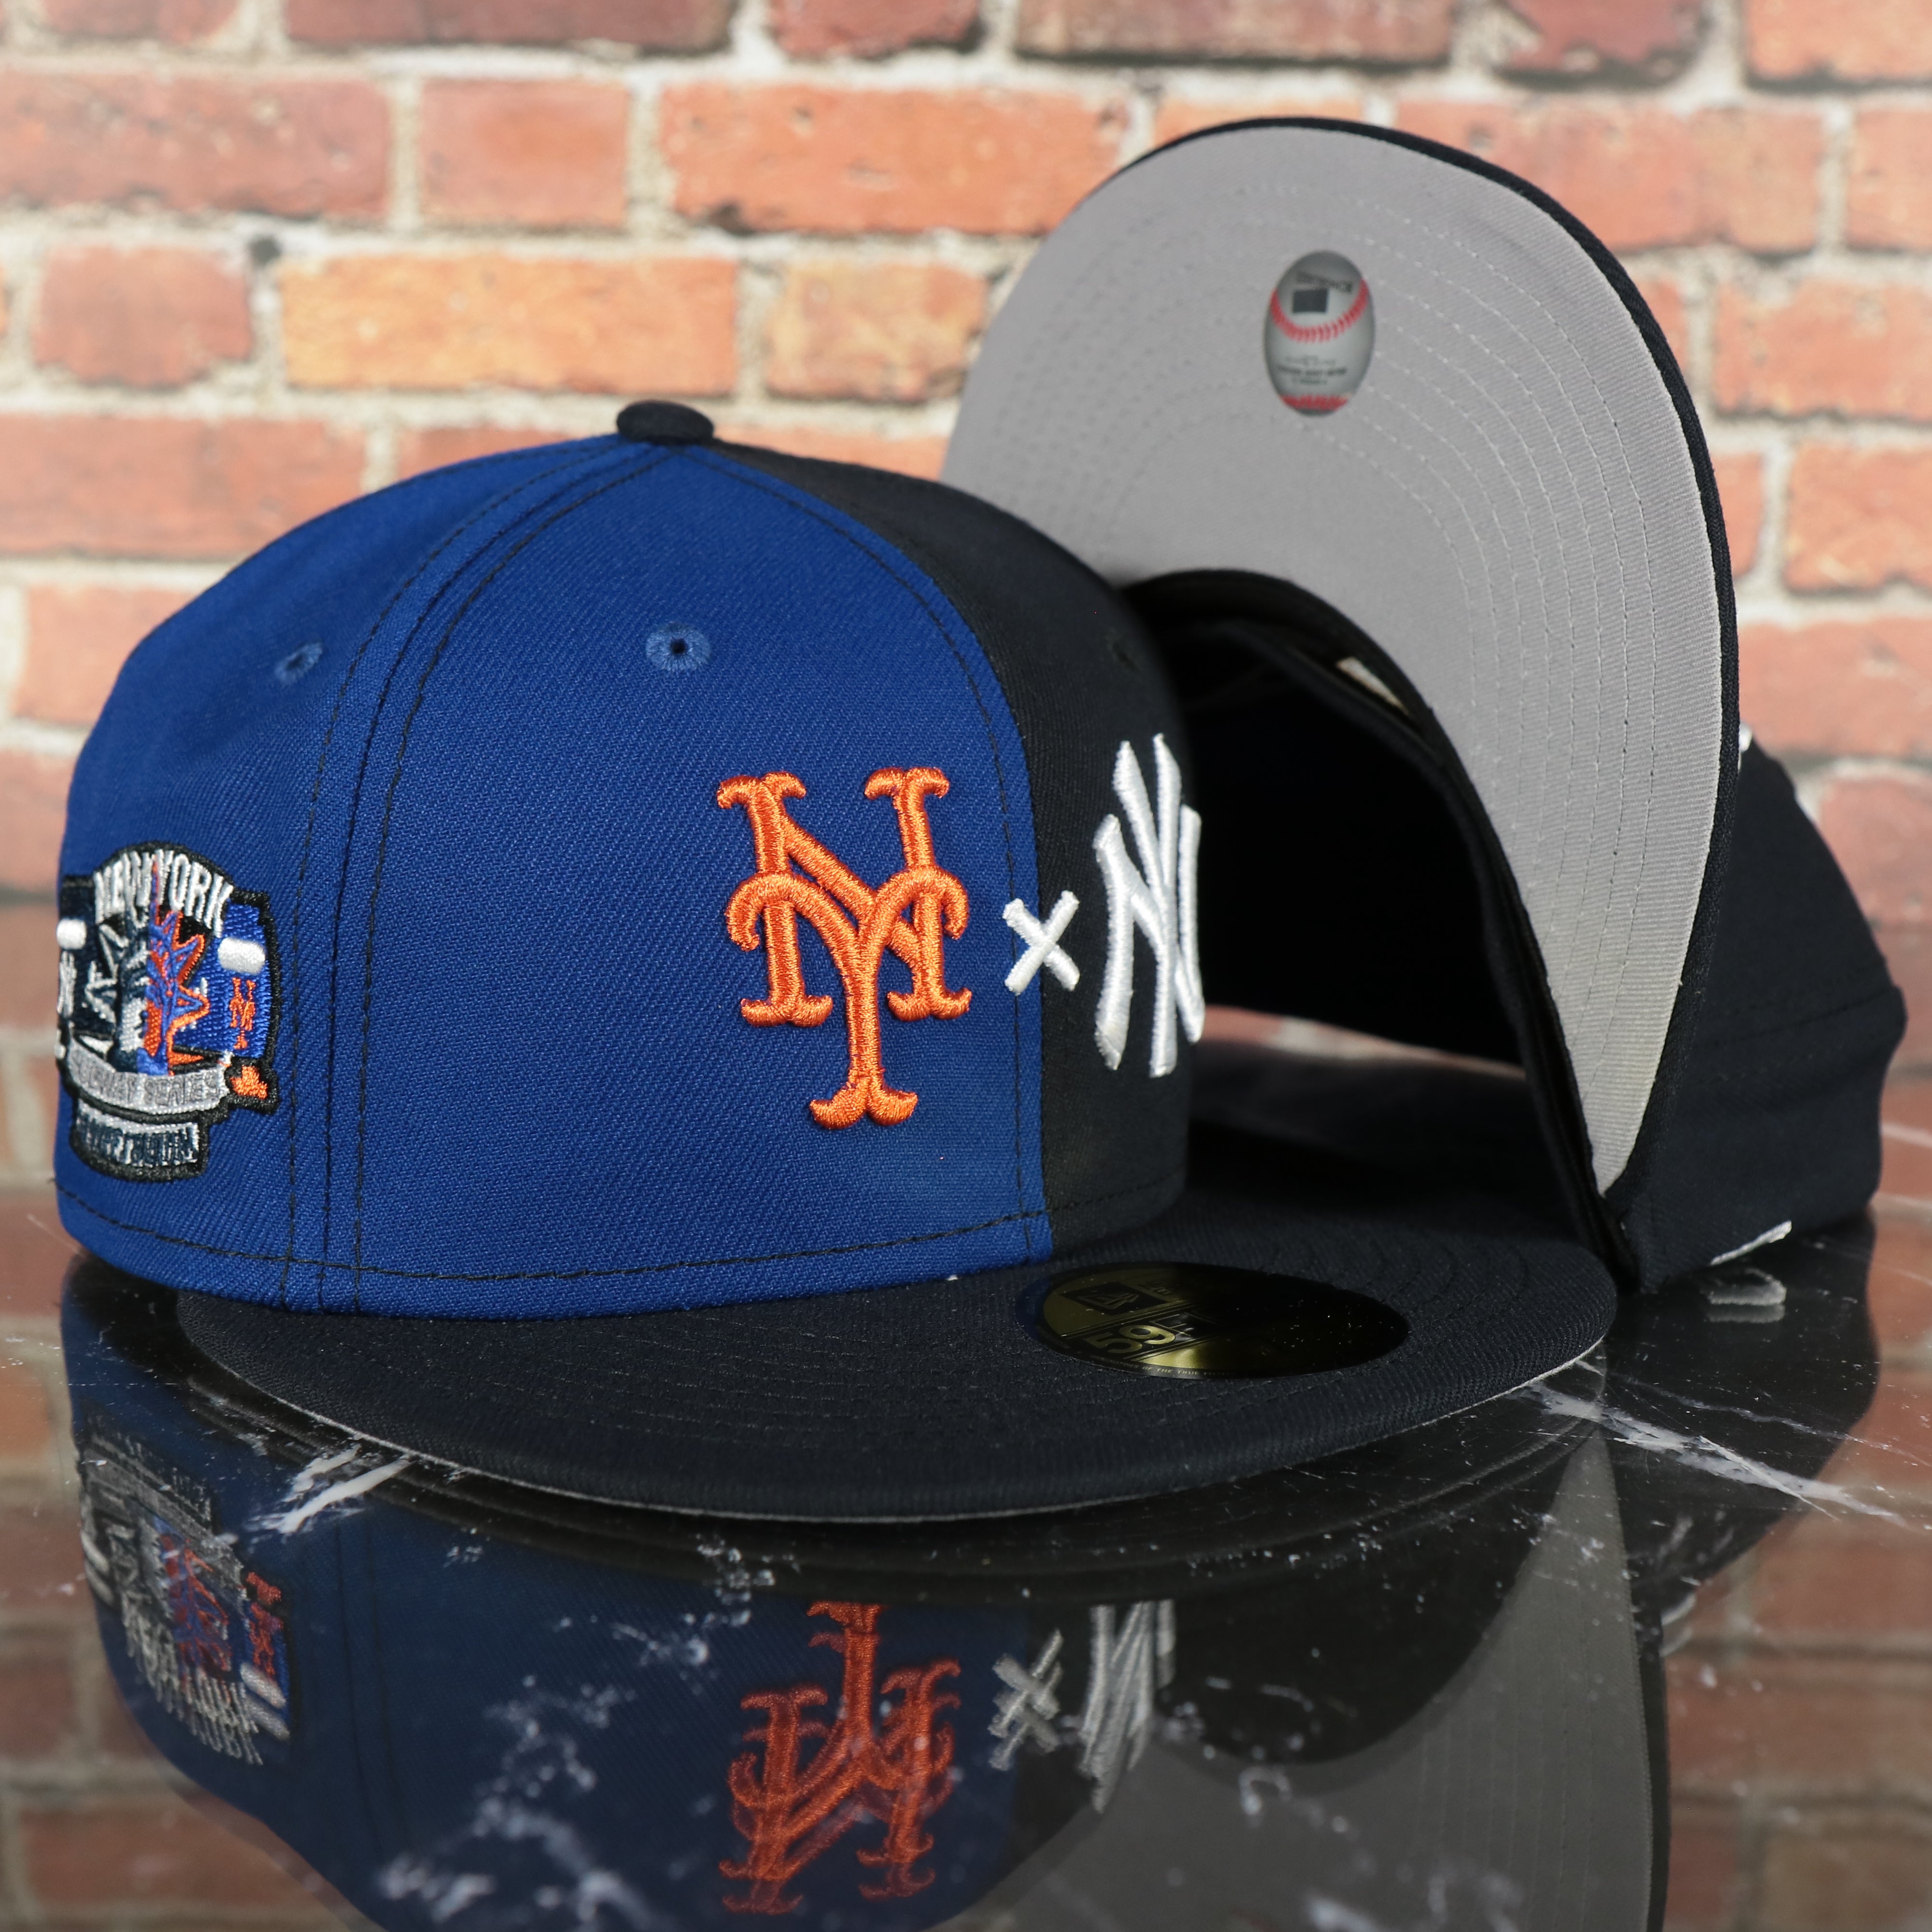 Mitchell & Ness New York Yankees Citrus Cooler Snapback Hat Black